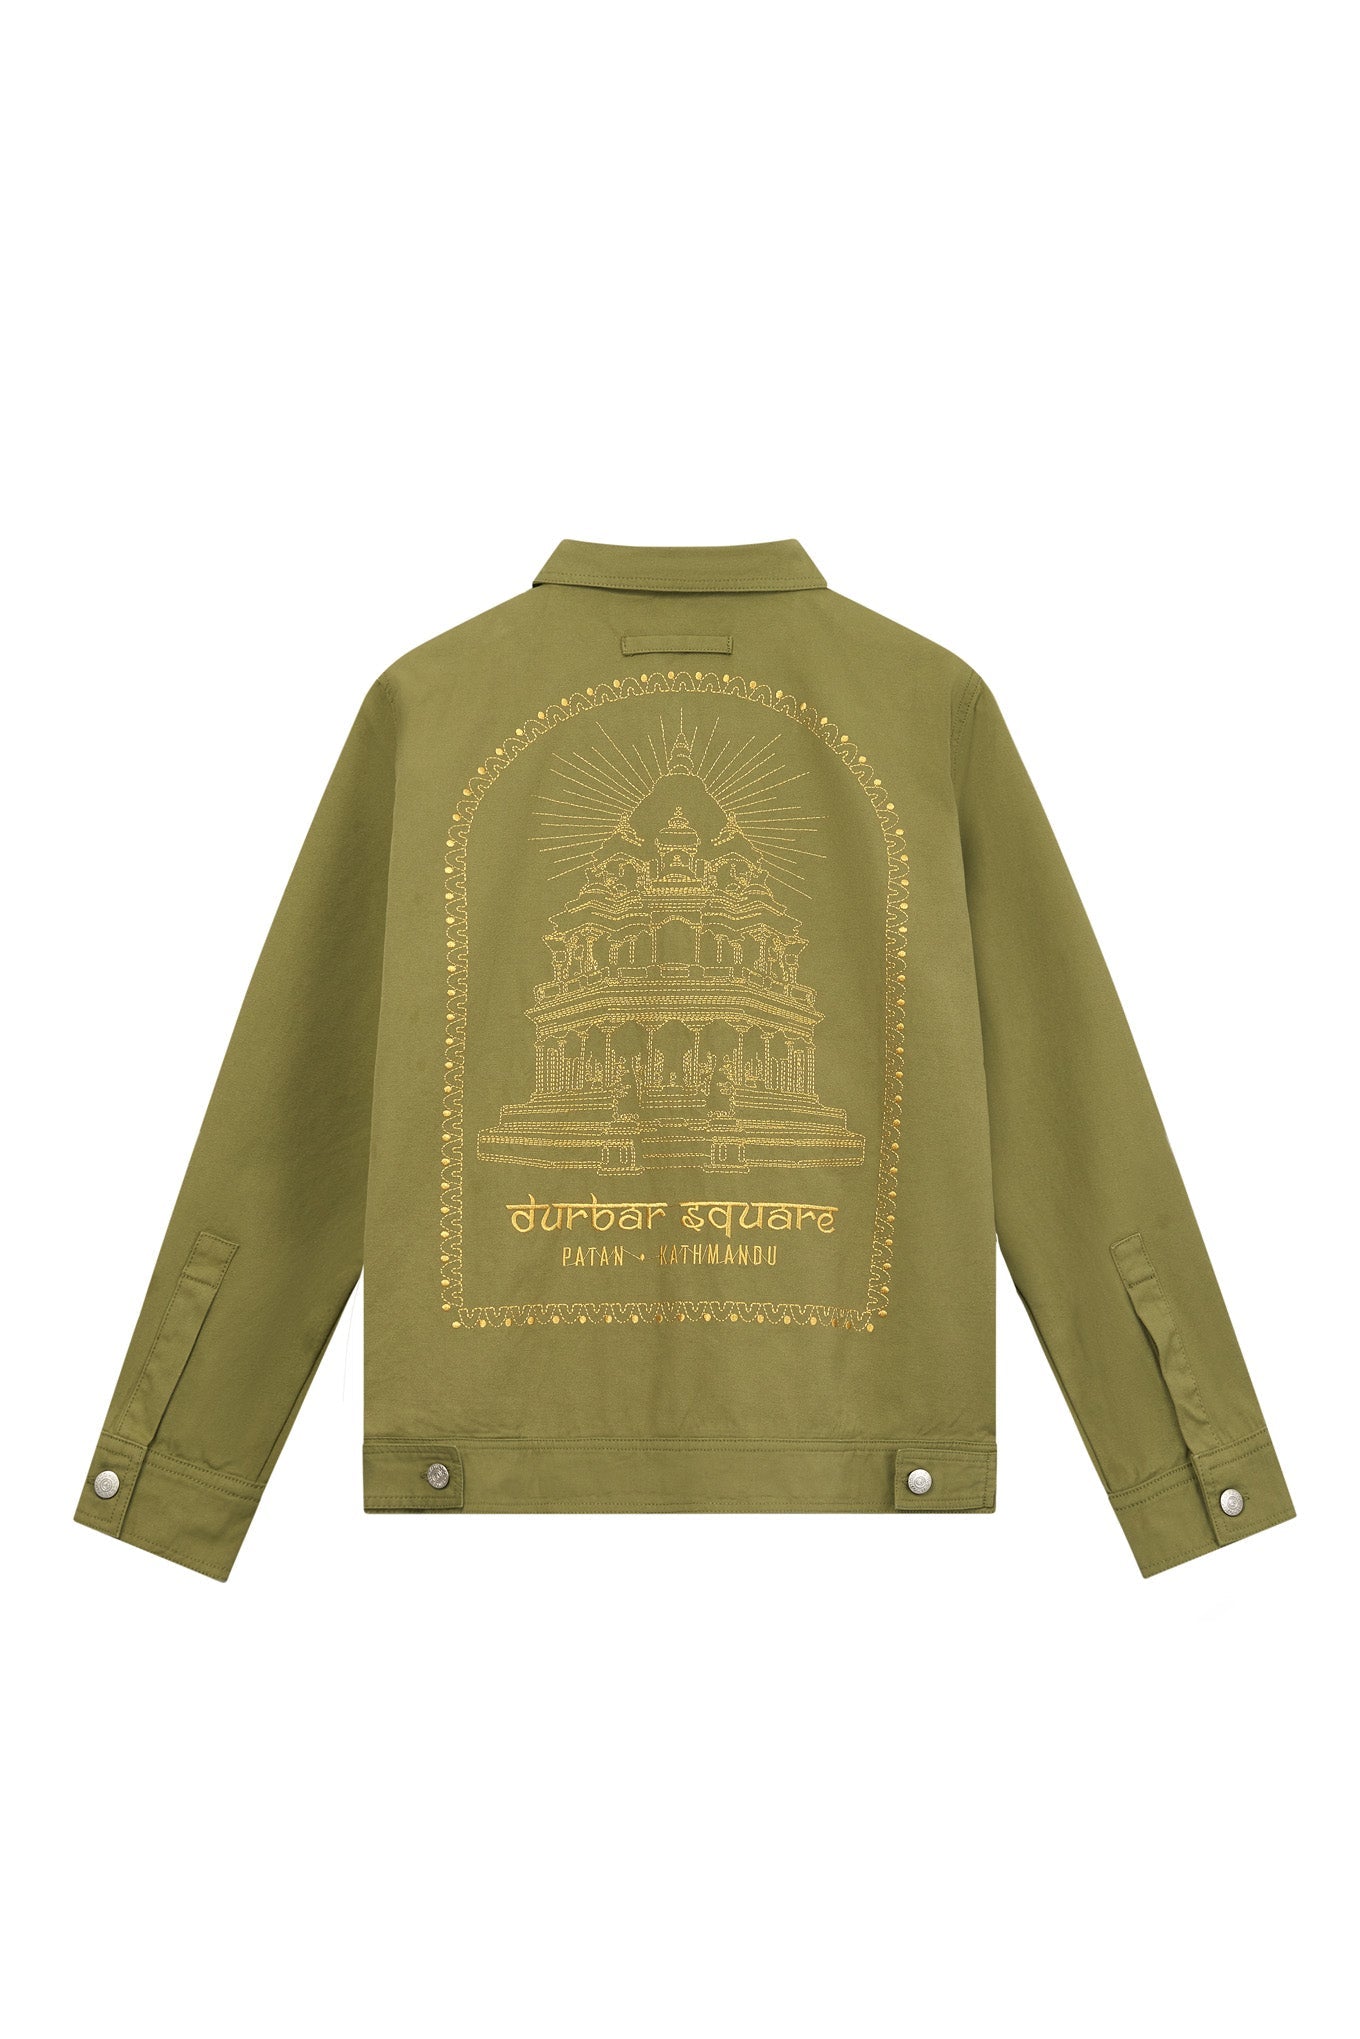 Khaki green men's jacket DUNBAR made of organic cotton by Komodo